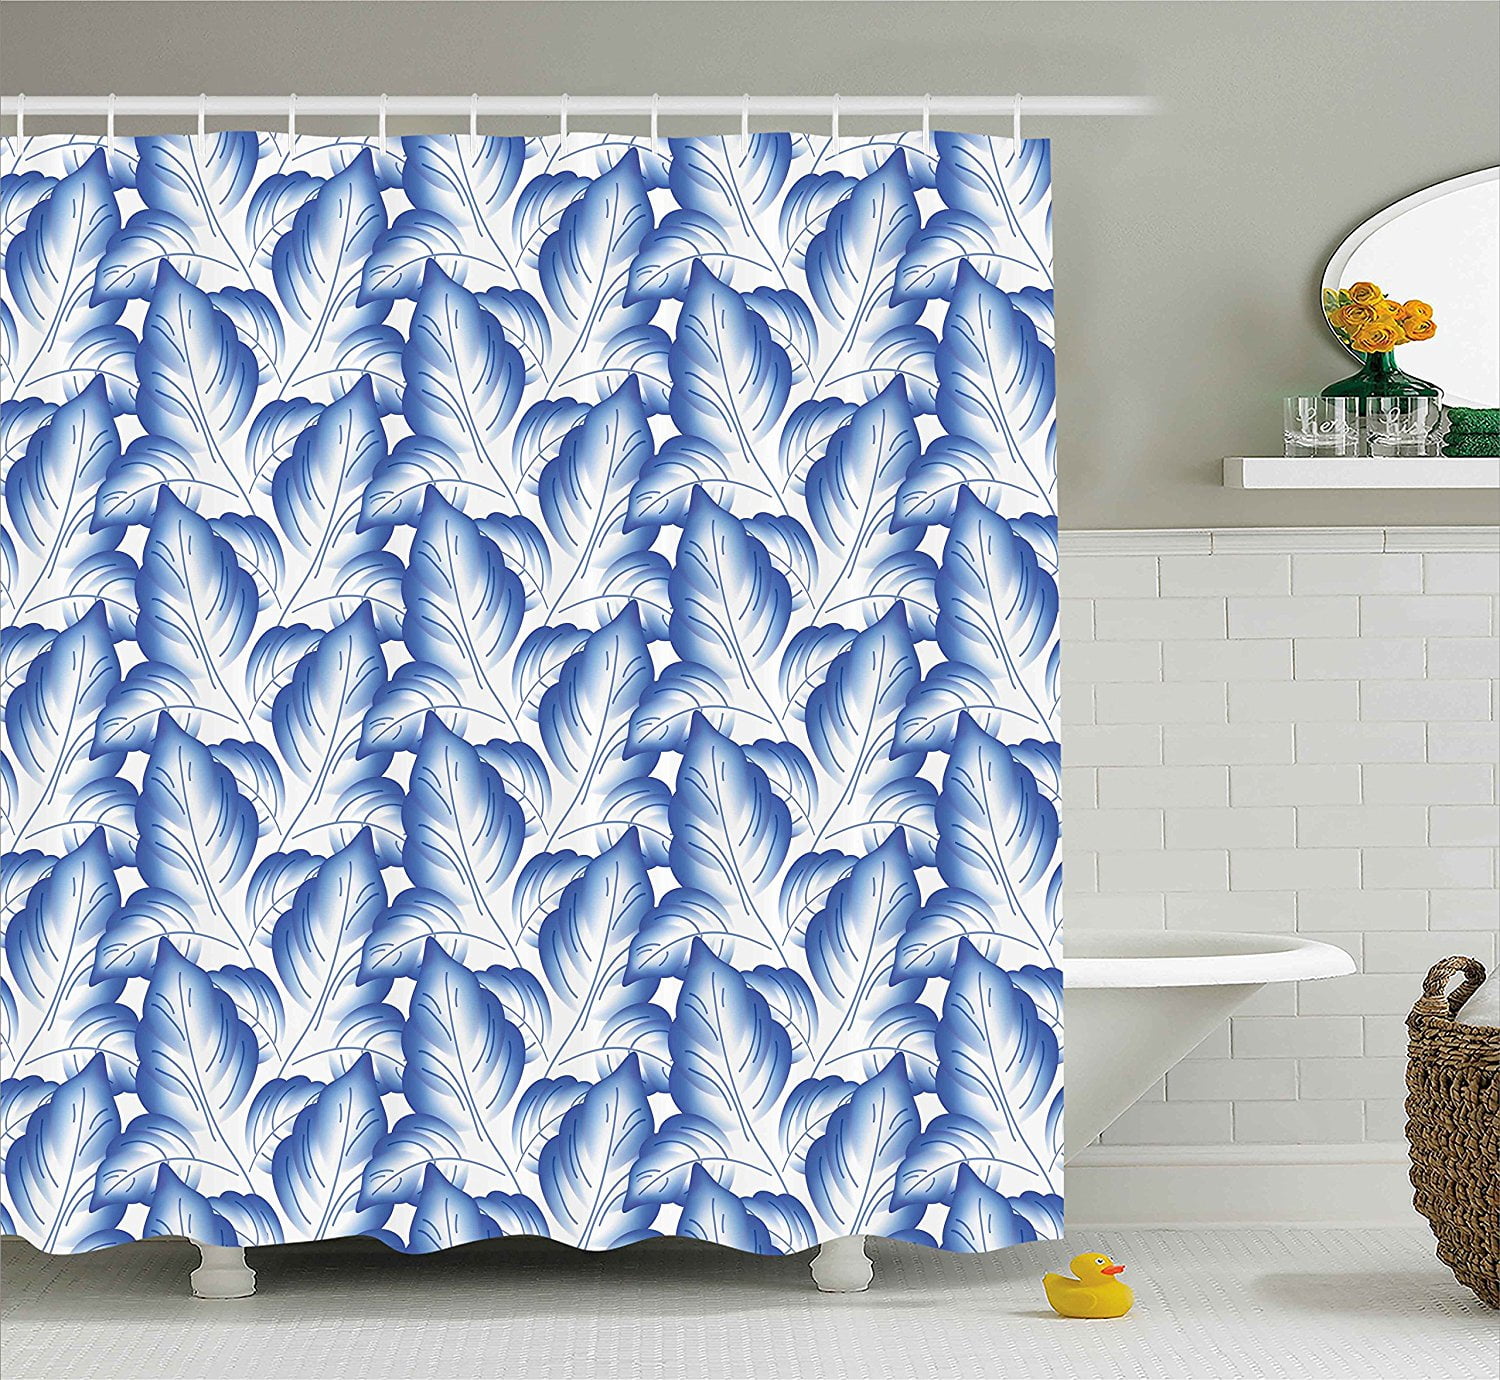 72X72" Graffiti Super Hero Shower Curtain Waterproof Fabric Bathroom Decor Mat 